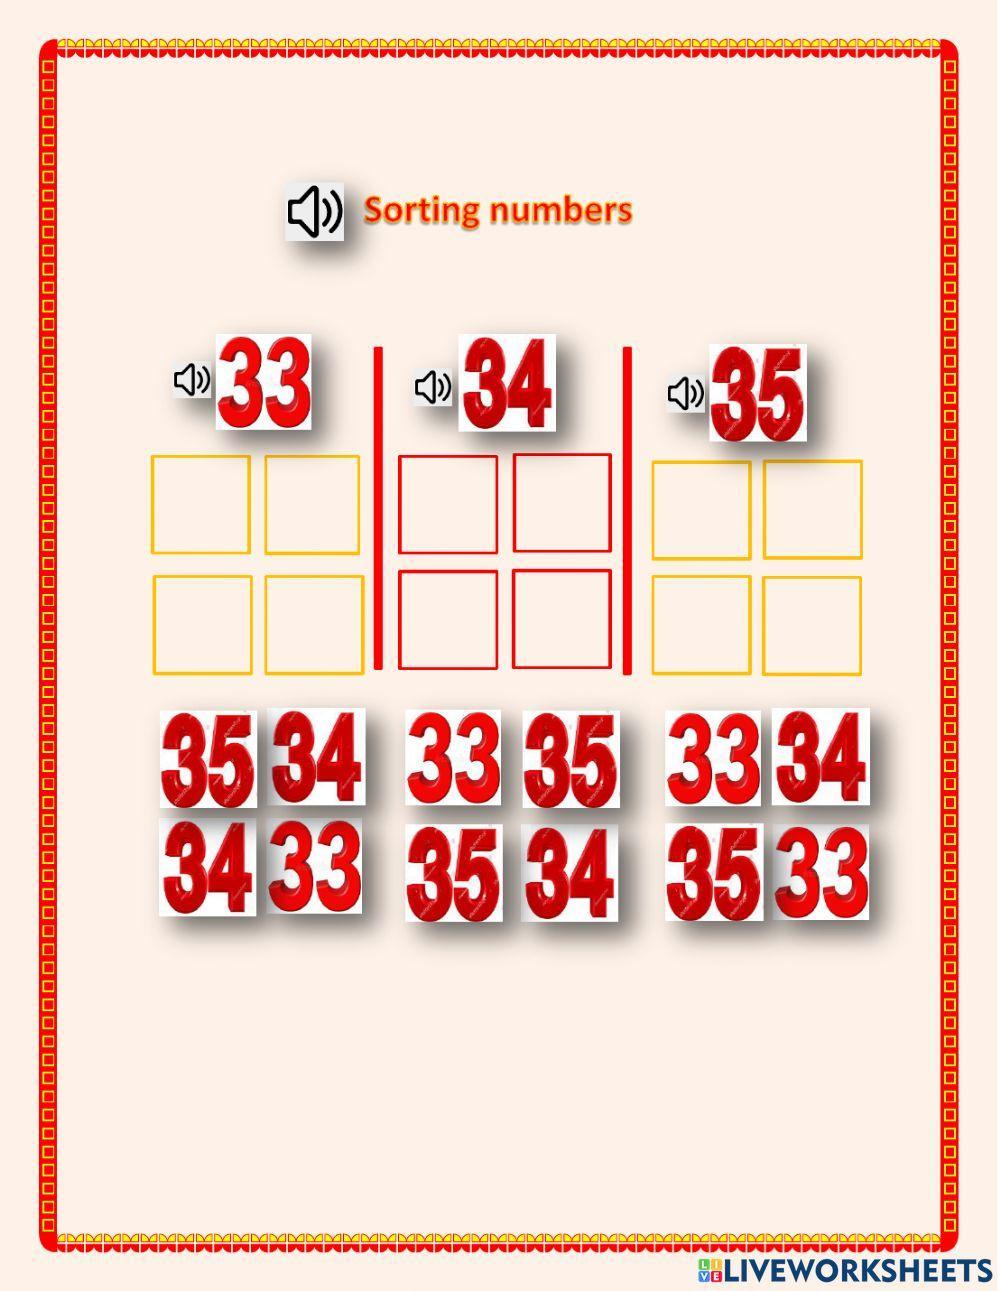 Sorting numbers - 33,34,35 - LN